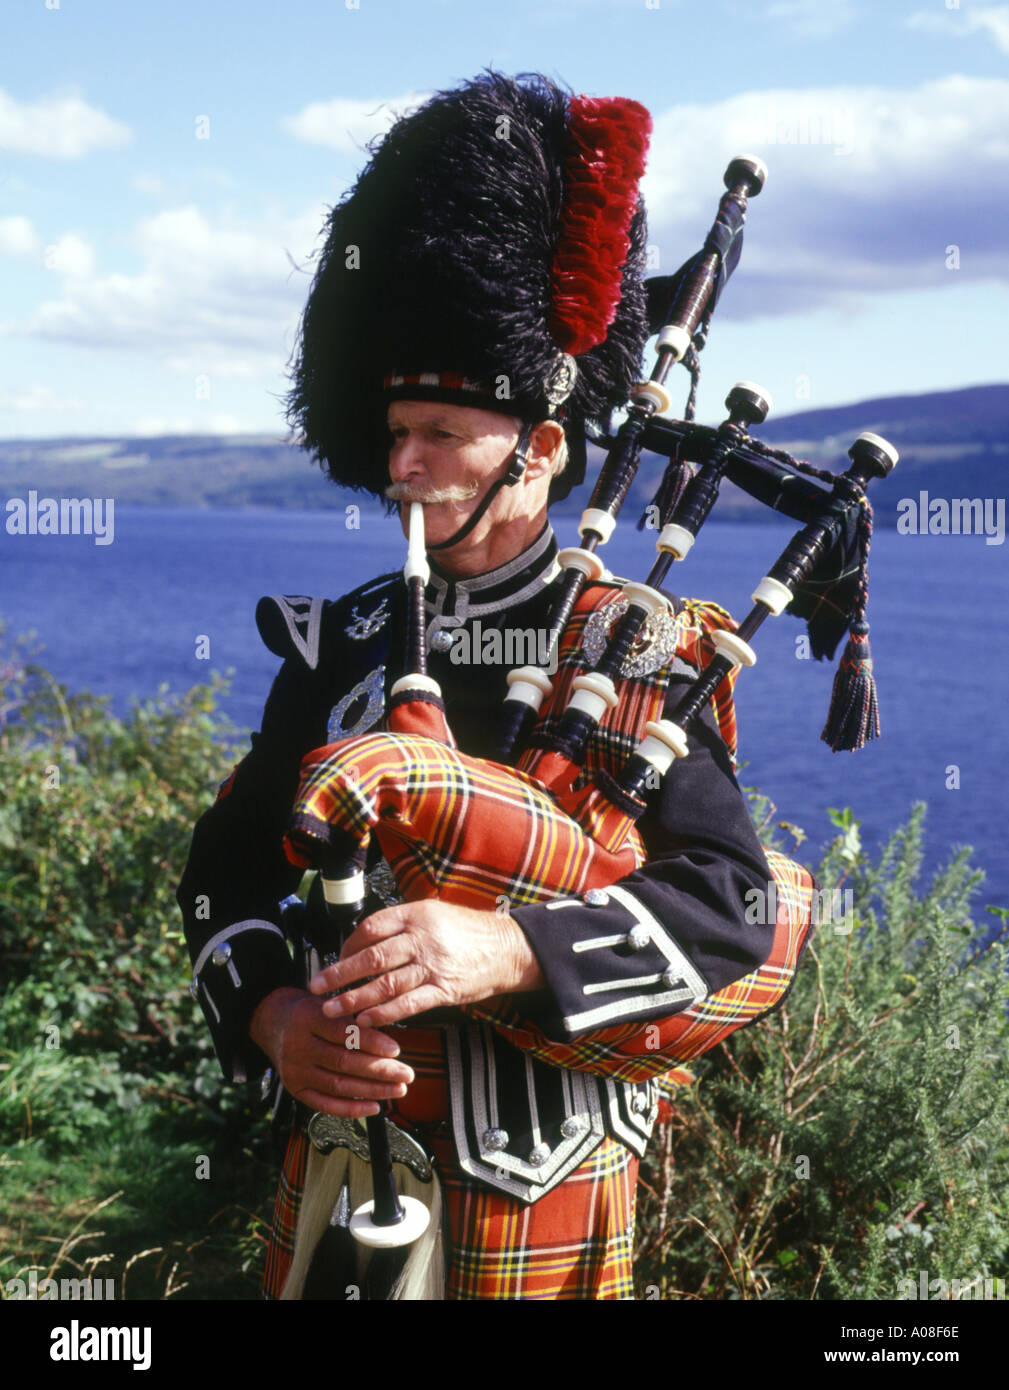 dh  BAGPIPES SCOTLAND Scottish piper tartan kilt uniform highland traditional highlander bagpiper bag pipes dress costume national highlands music Stock Photo